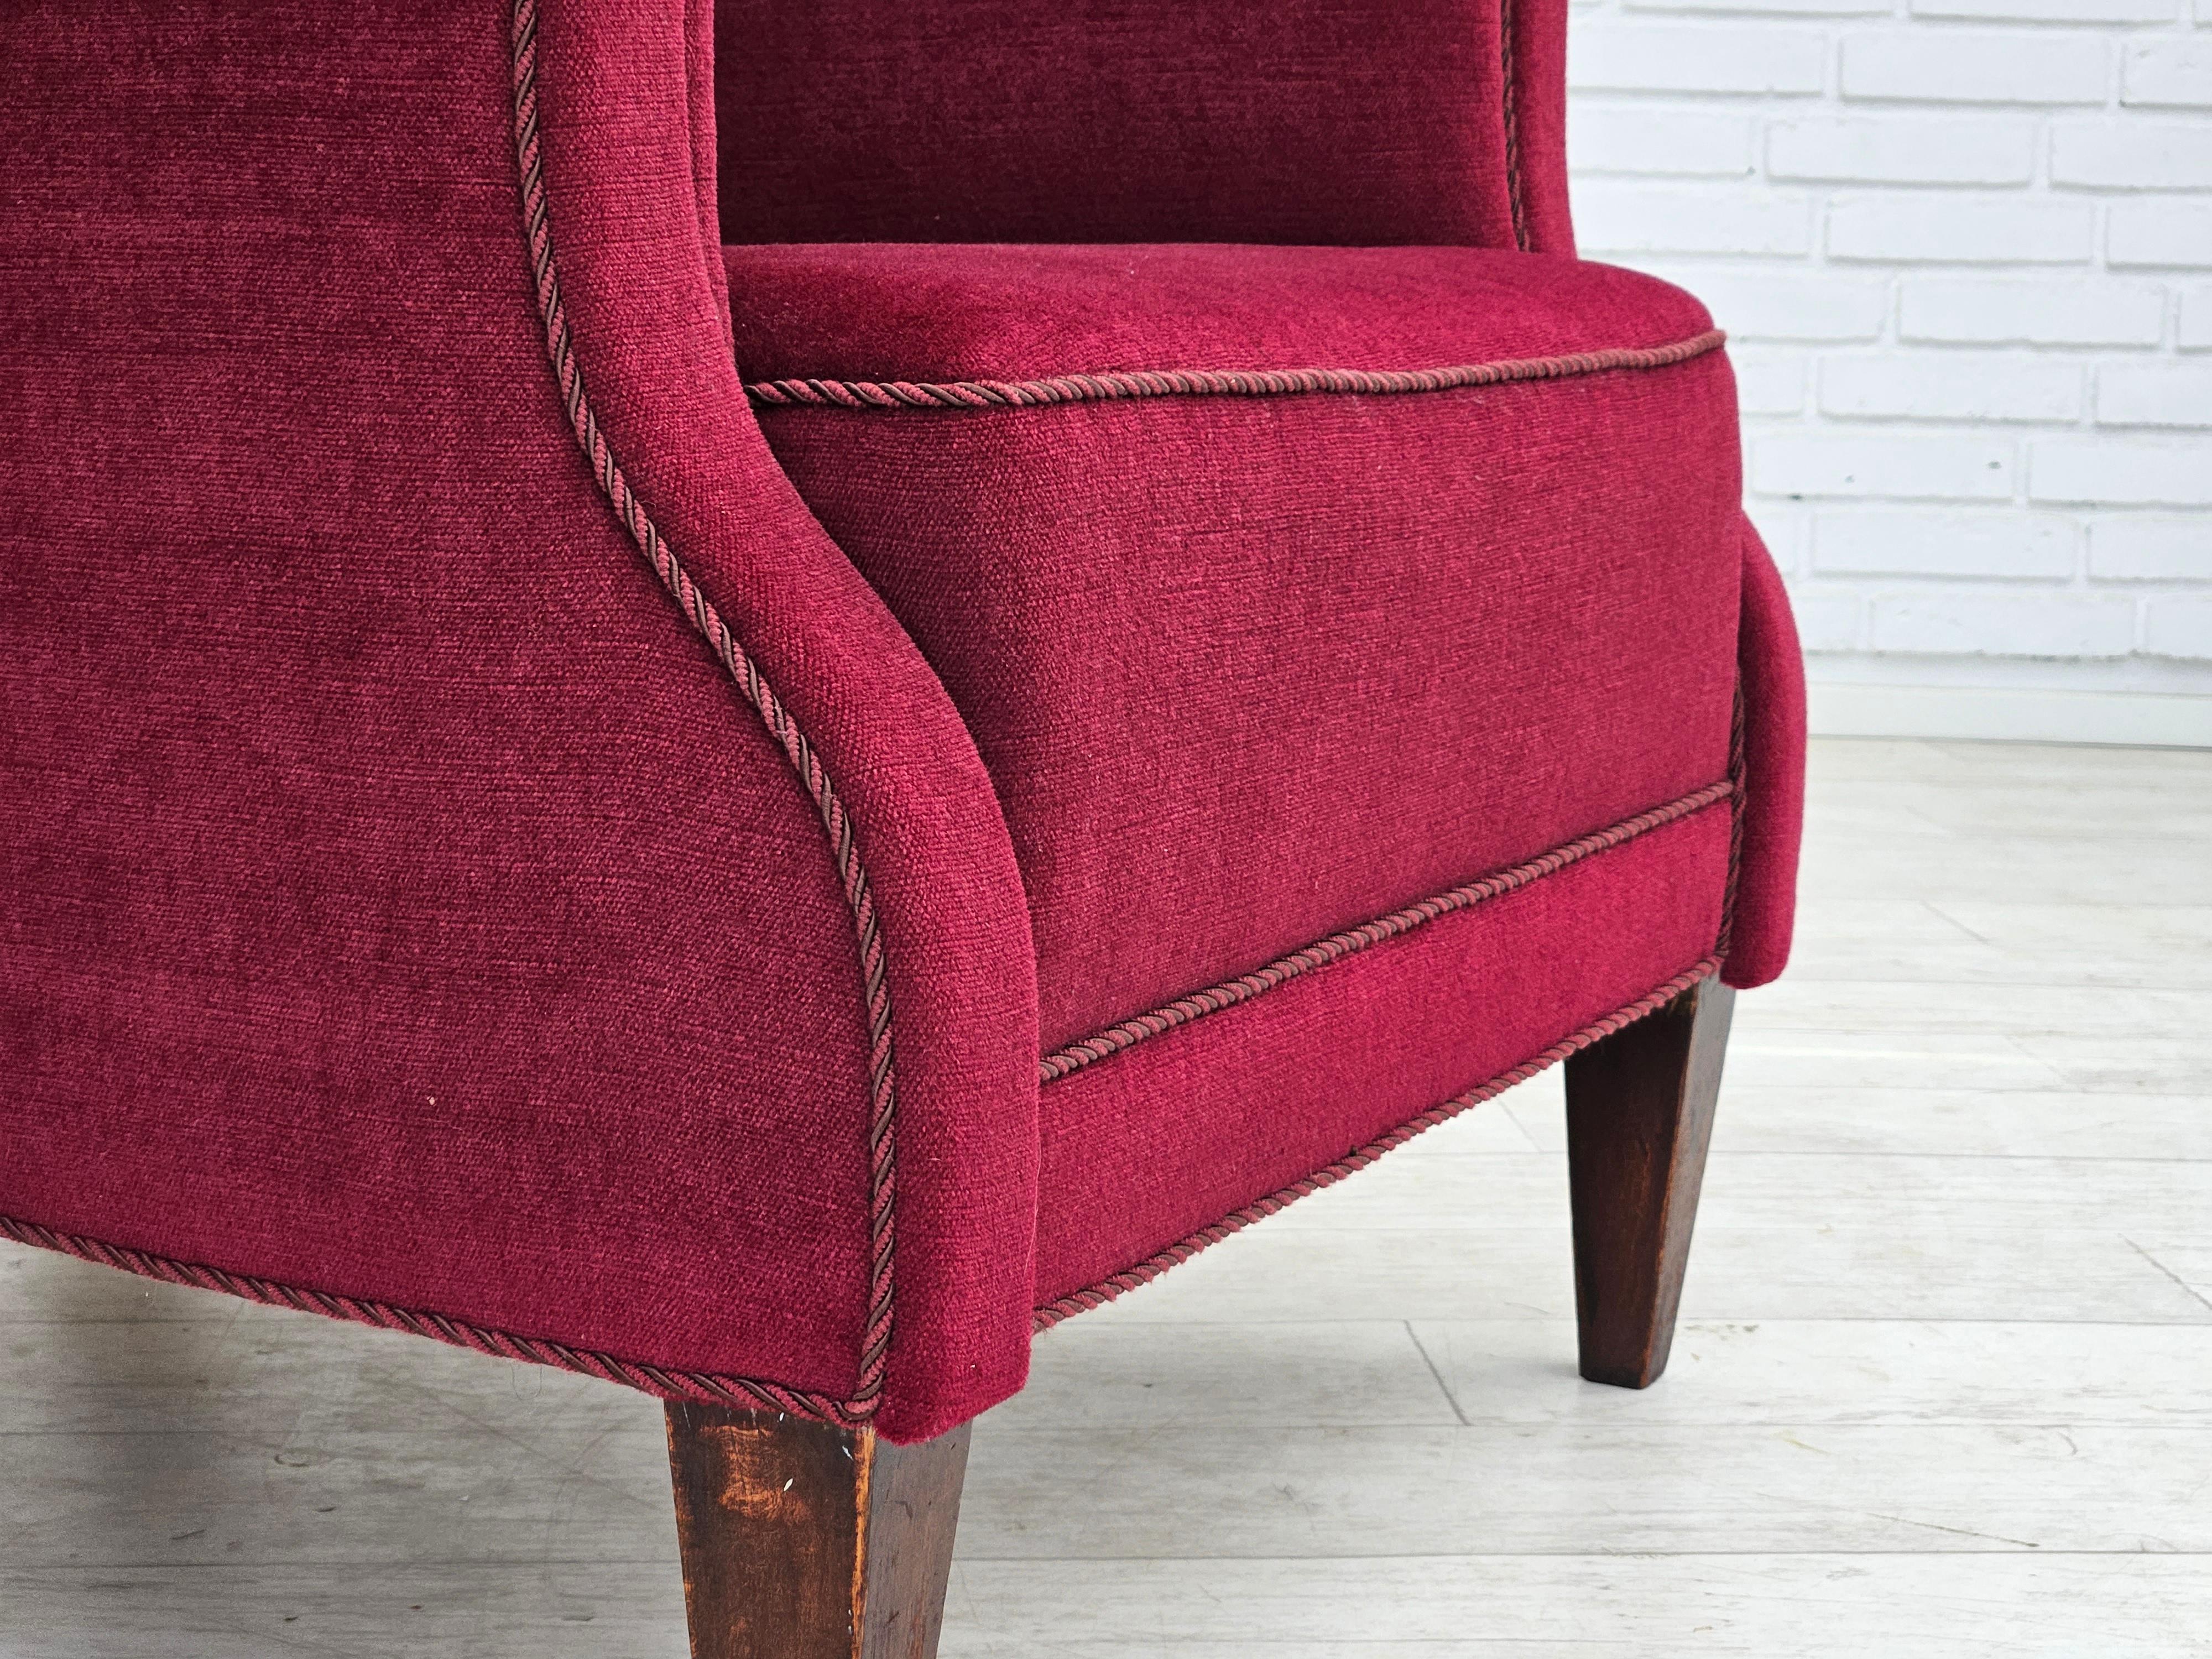 Scandinavian Modern 1950s, Danish vintage armchair in cherry-red velvet, original condition.